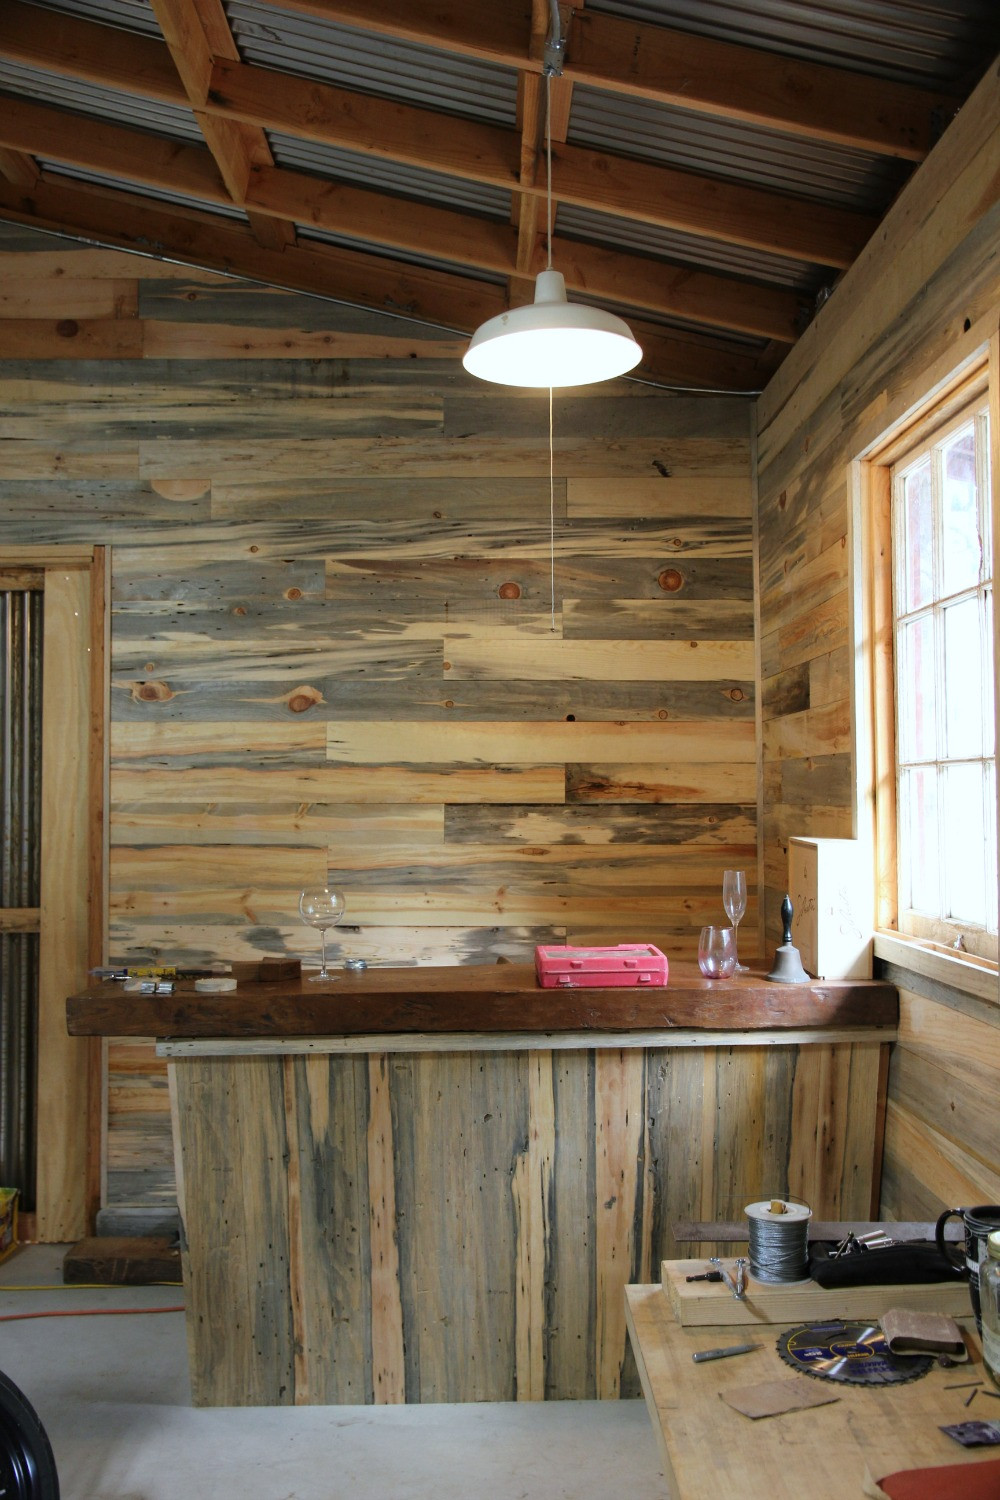 DIY Wood Plank Walls
 DIY Pipe Shelf & Reclaimed Wood Plank Walls